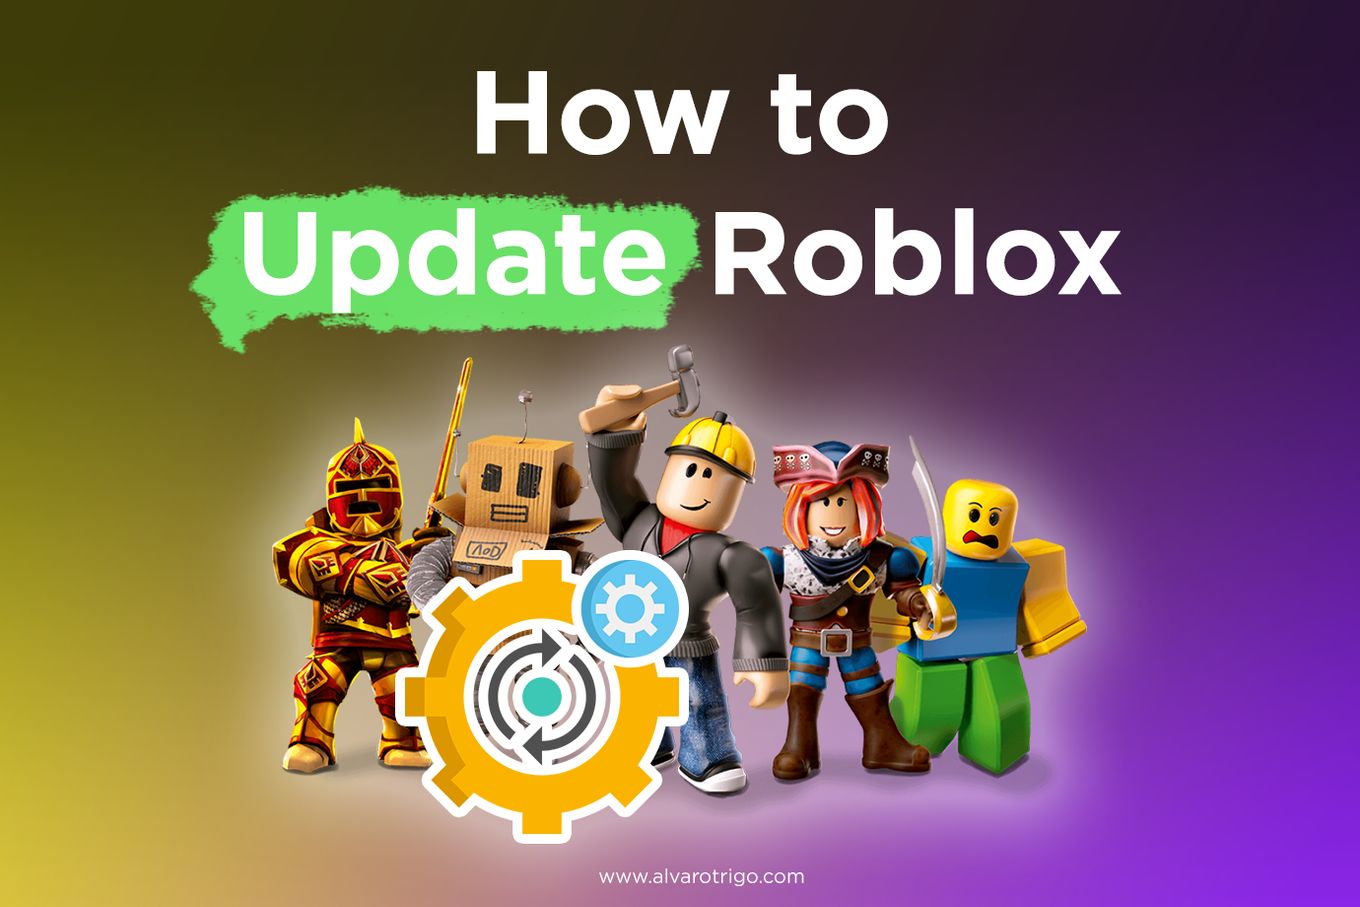 Updating Roblox